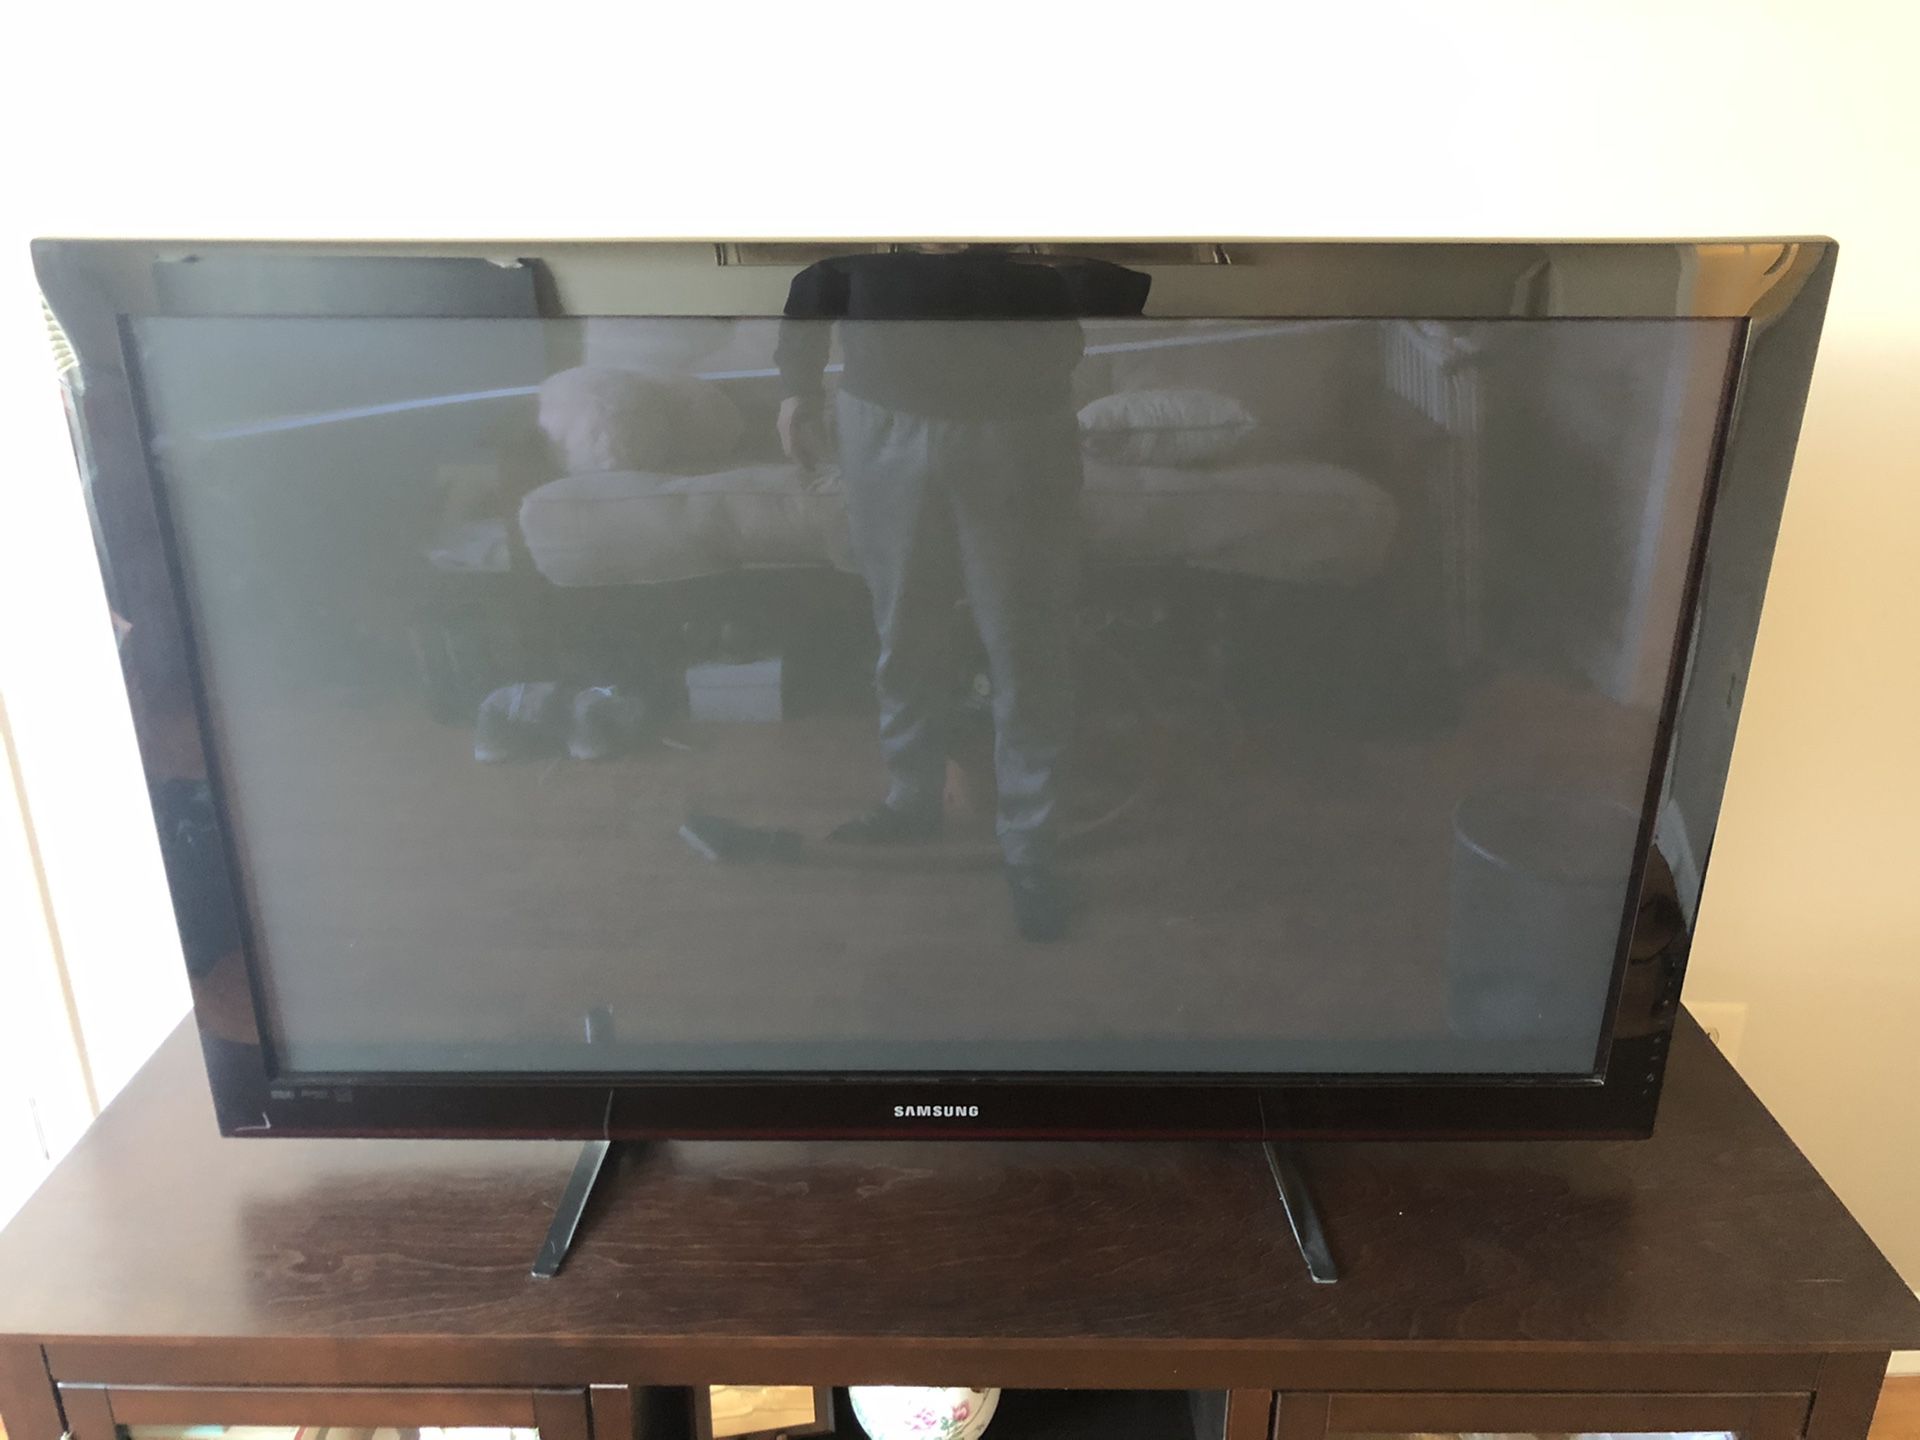 Samsung 44” display TV